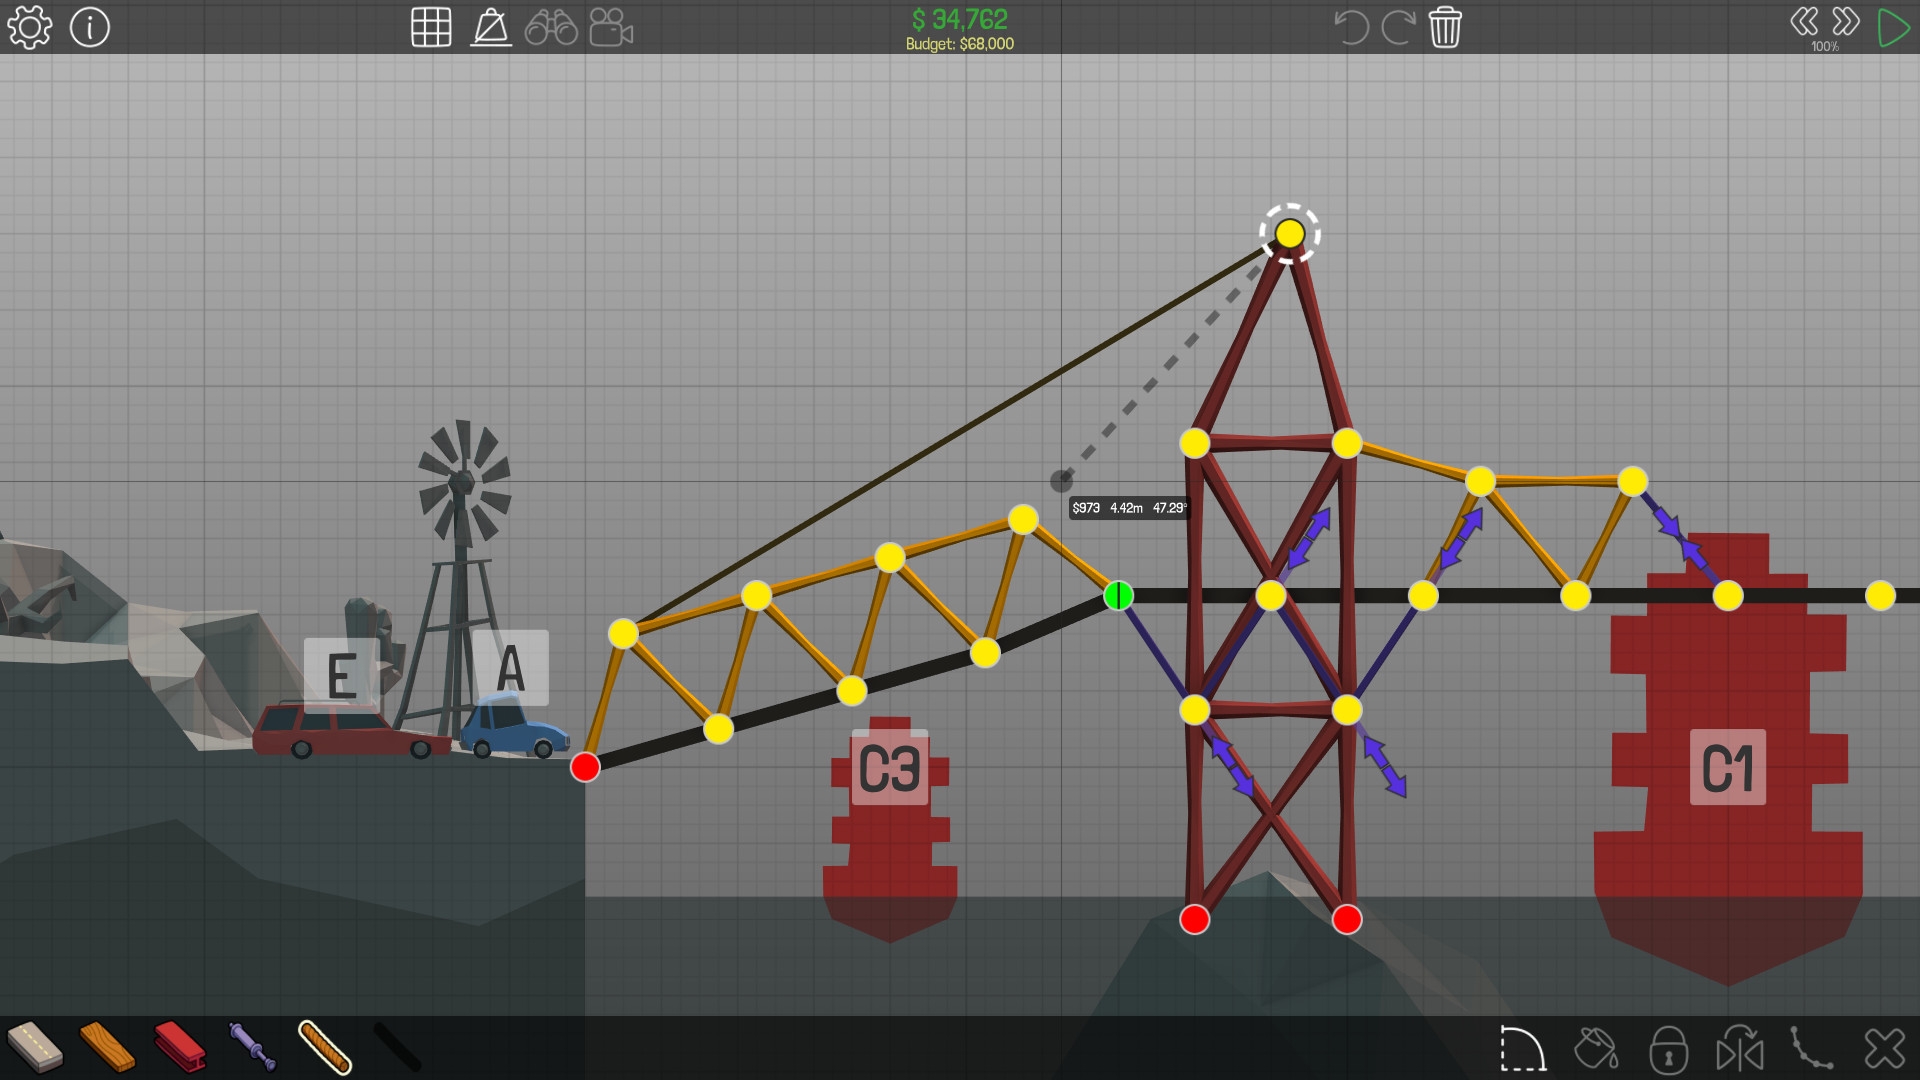 Construct A Bridge Game: Free Online Bridge Building Video Game for Kids